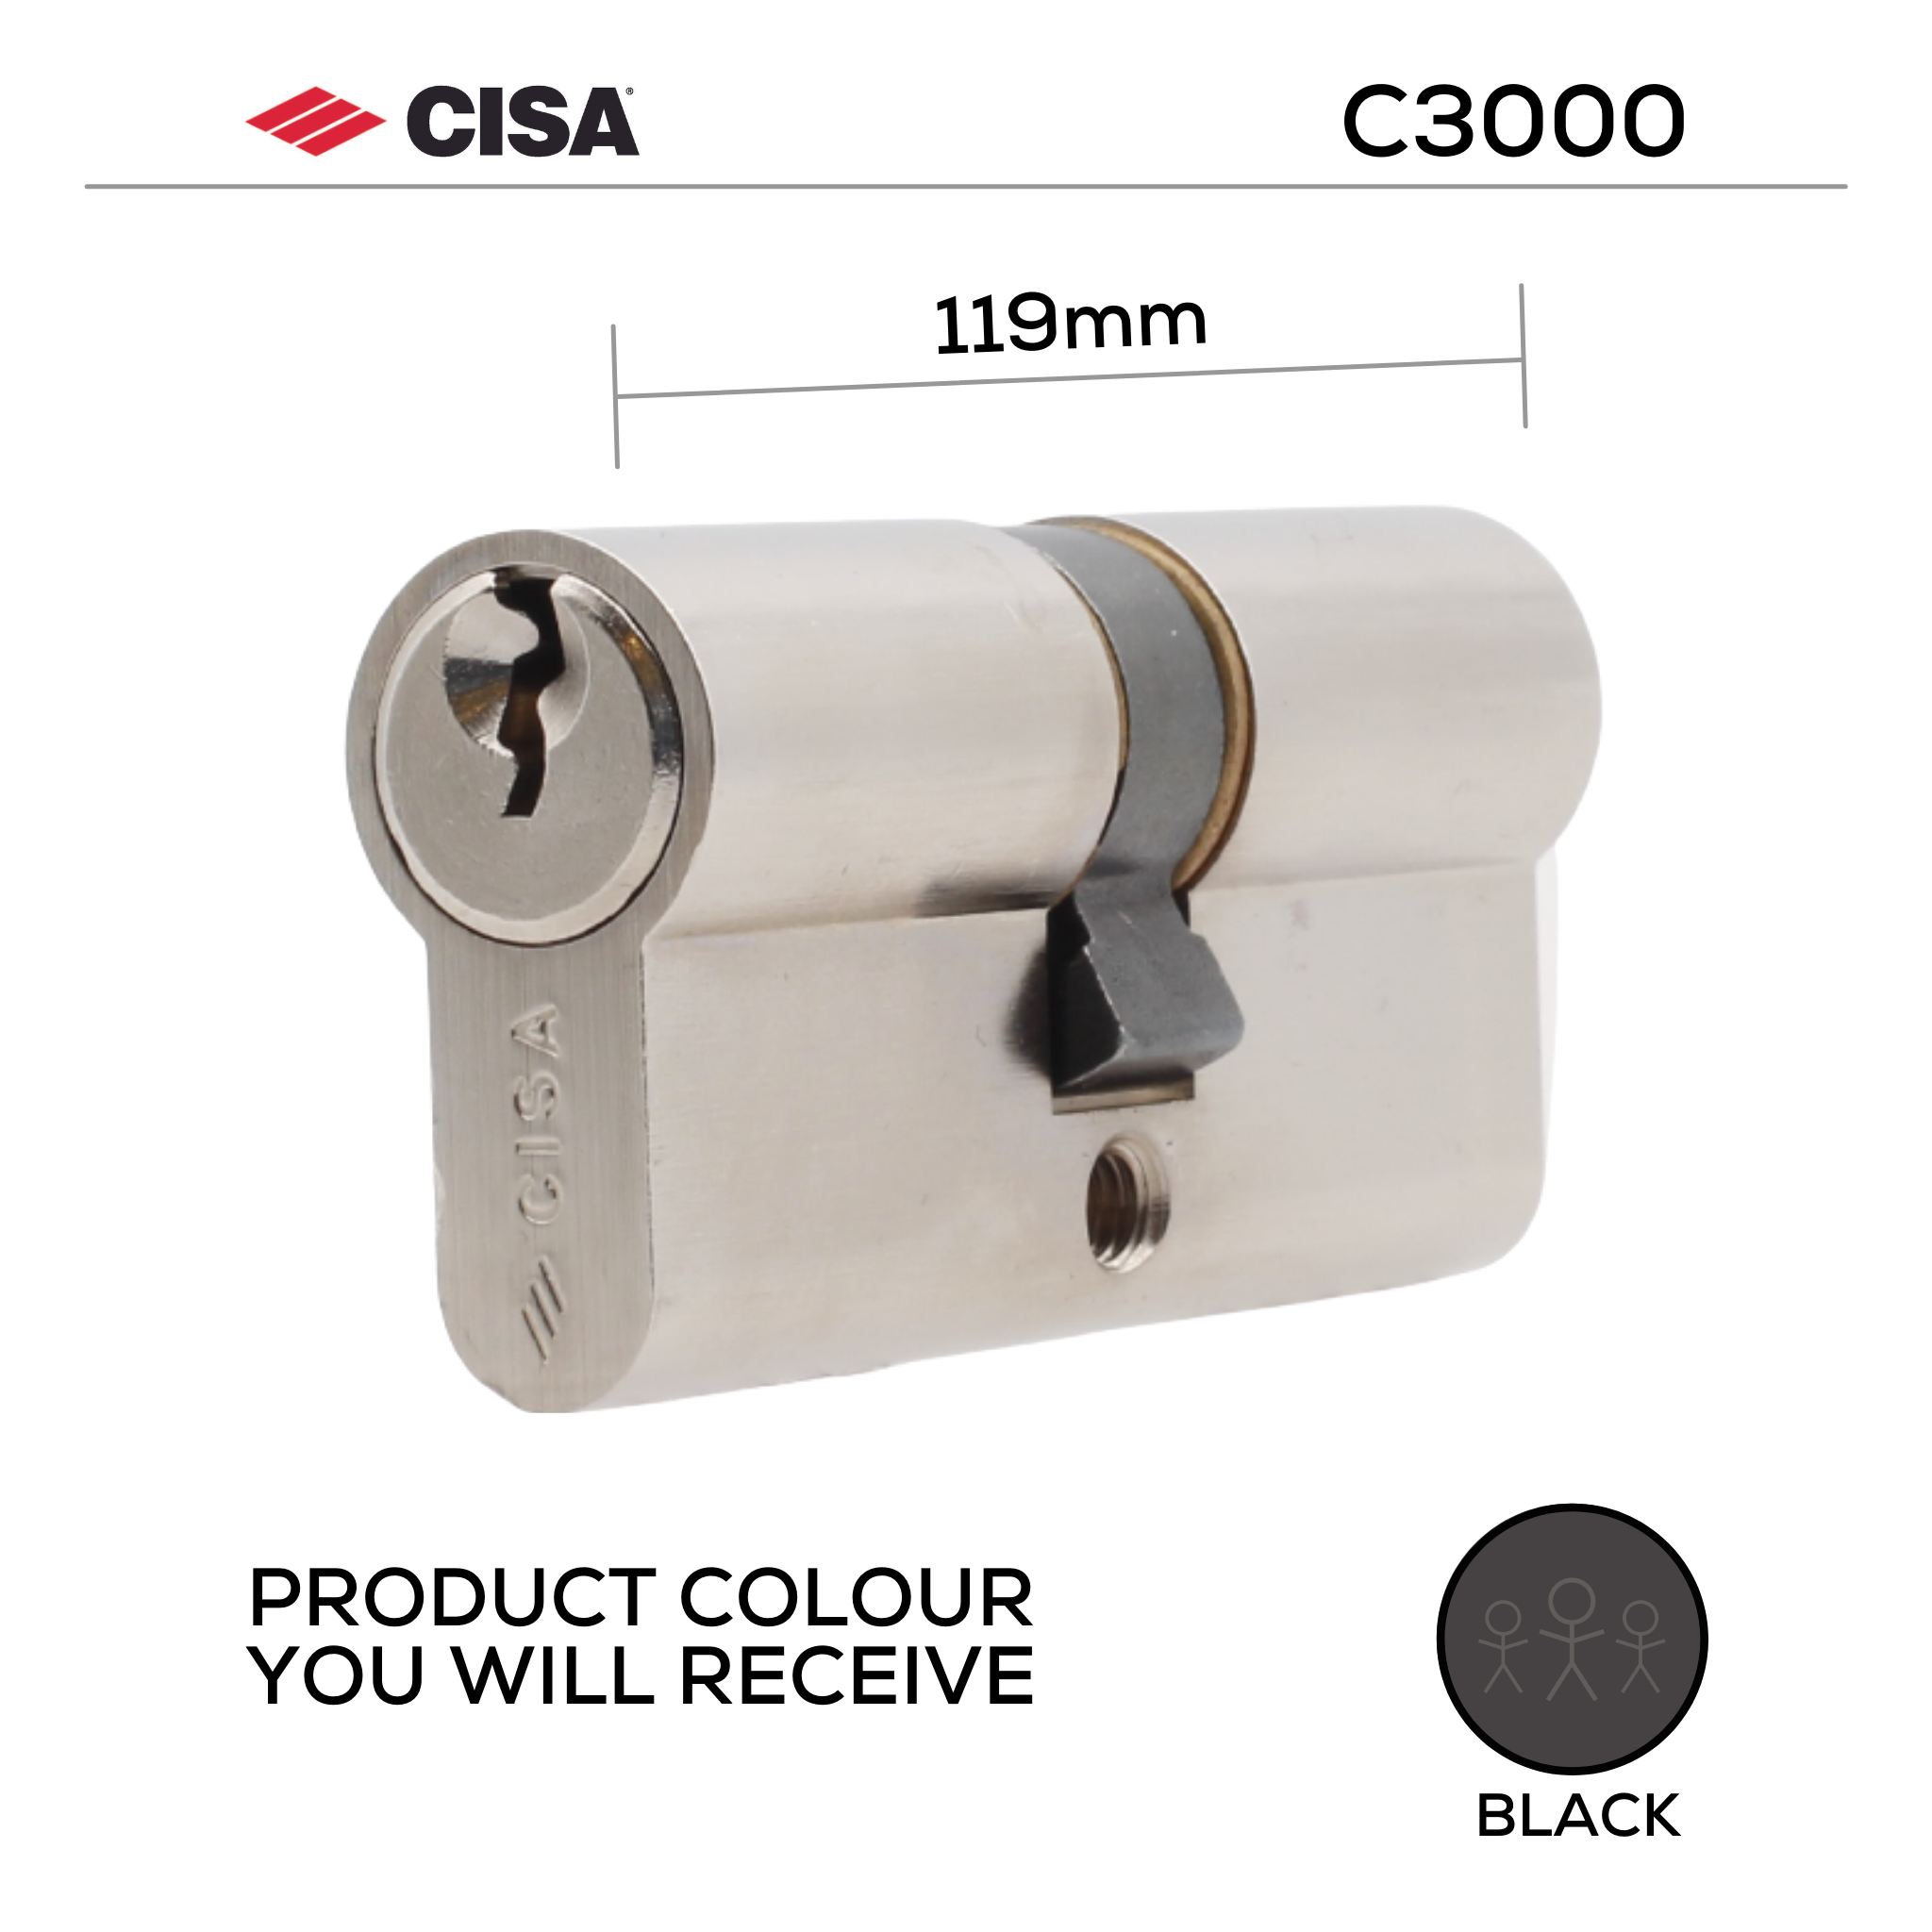 0N310-40-00-BLK-KD, 119mm - 59.5/59.5, Double Cylinder, C3000, Key to Key, Keyed to Differ (Standard), 3 Keys, 6 Pin, Black, CISA